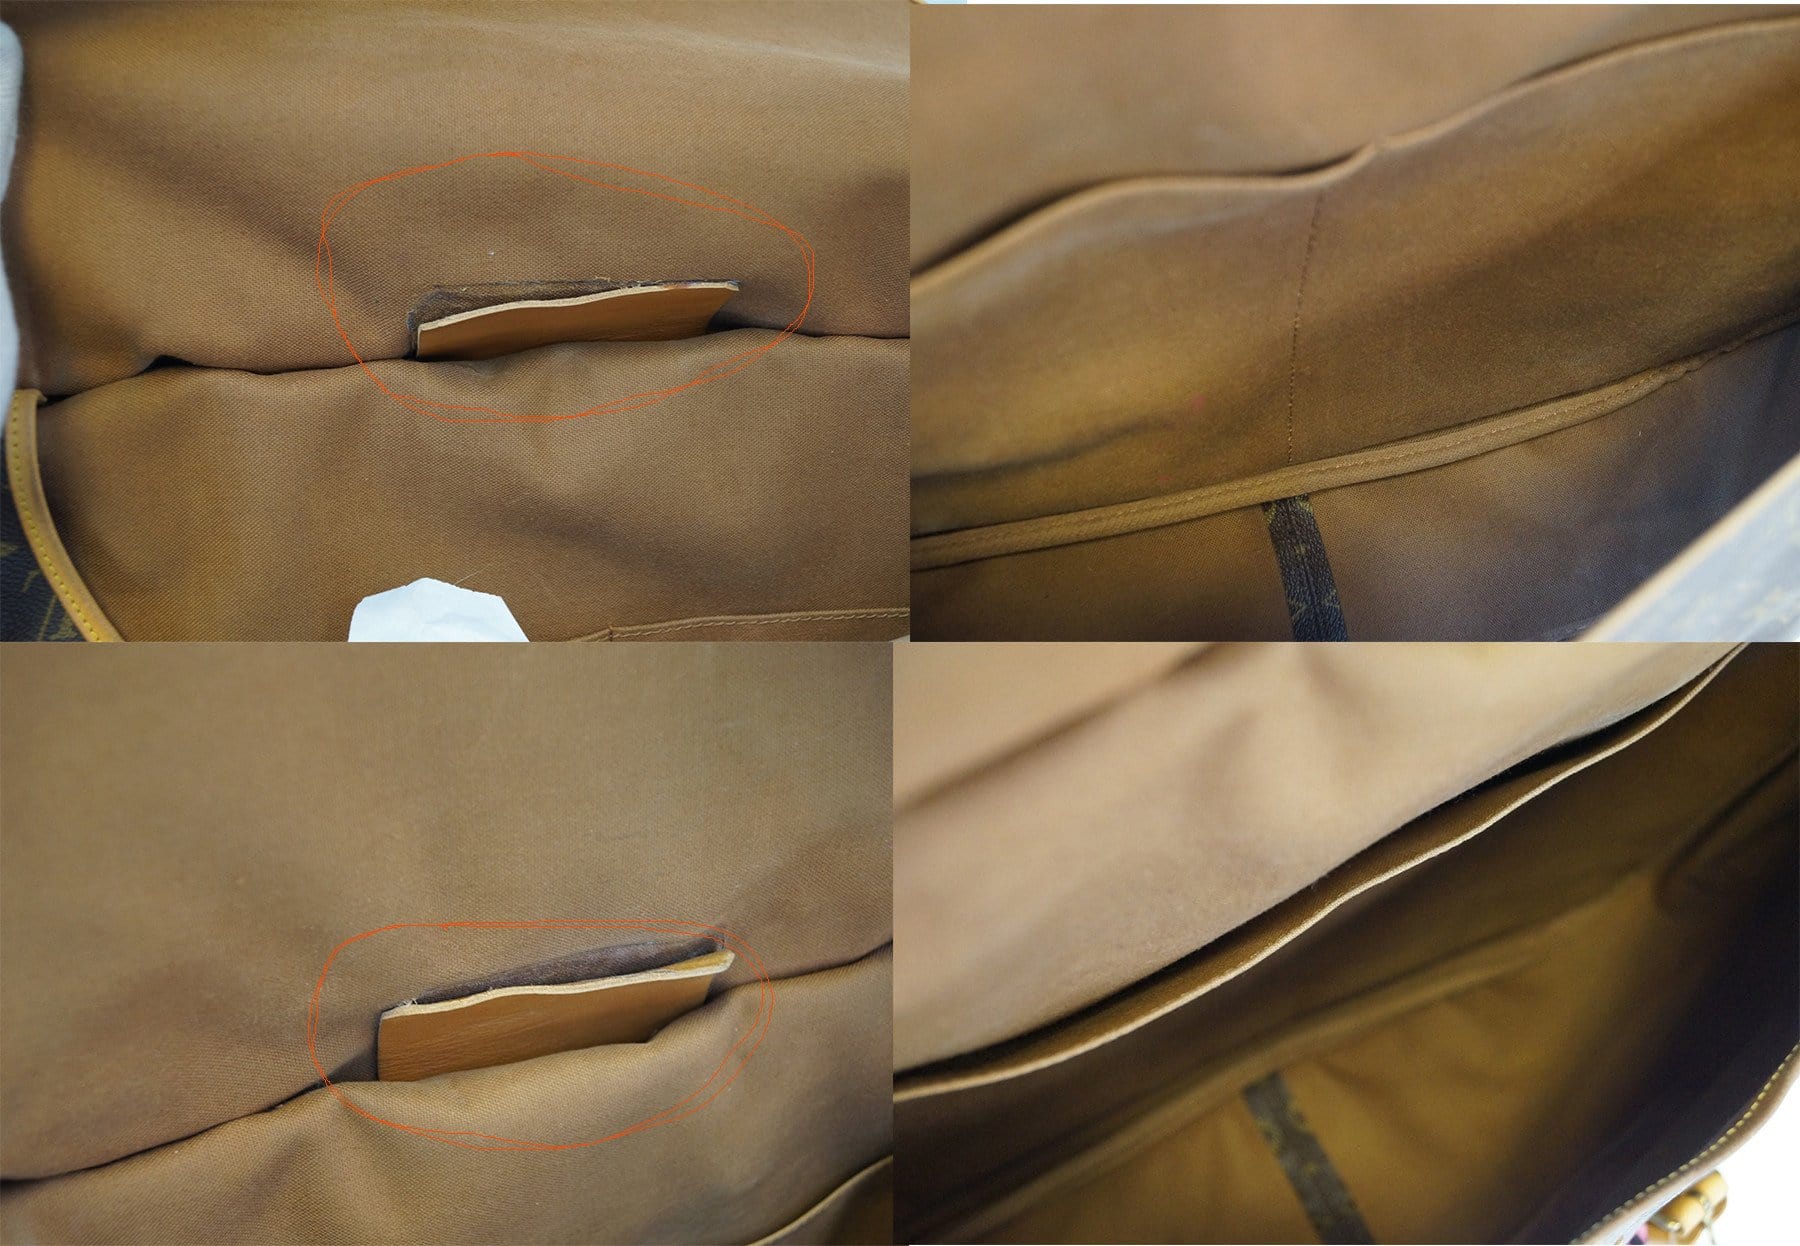 Shop for Louis Vuitton Monogram Canvas Leather Saumur 43 cm Messenger Bag -  Shipped from USA